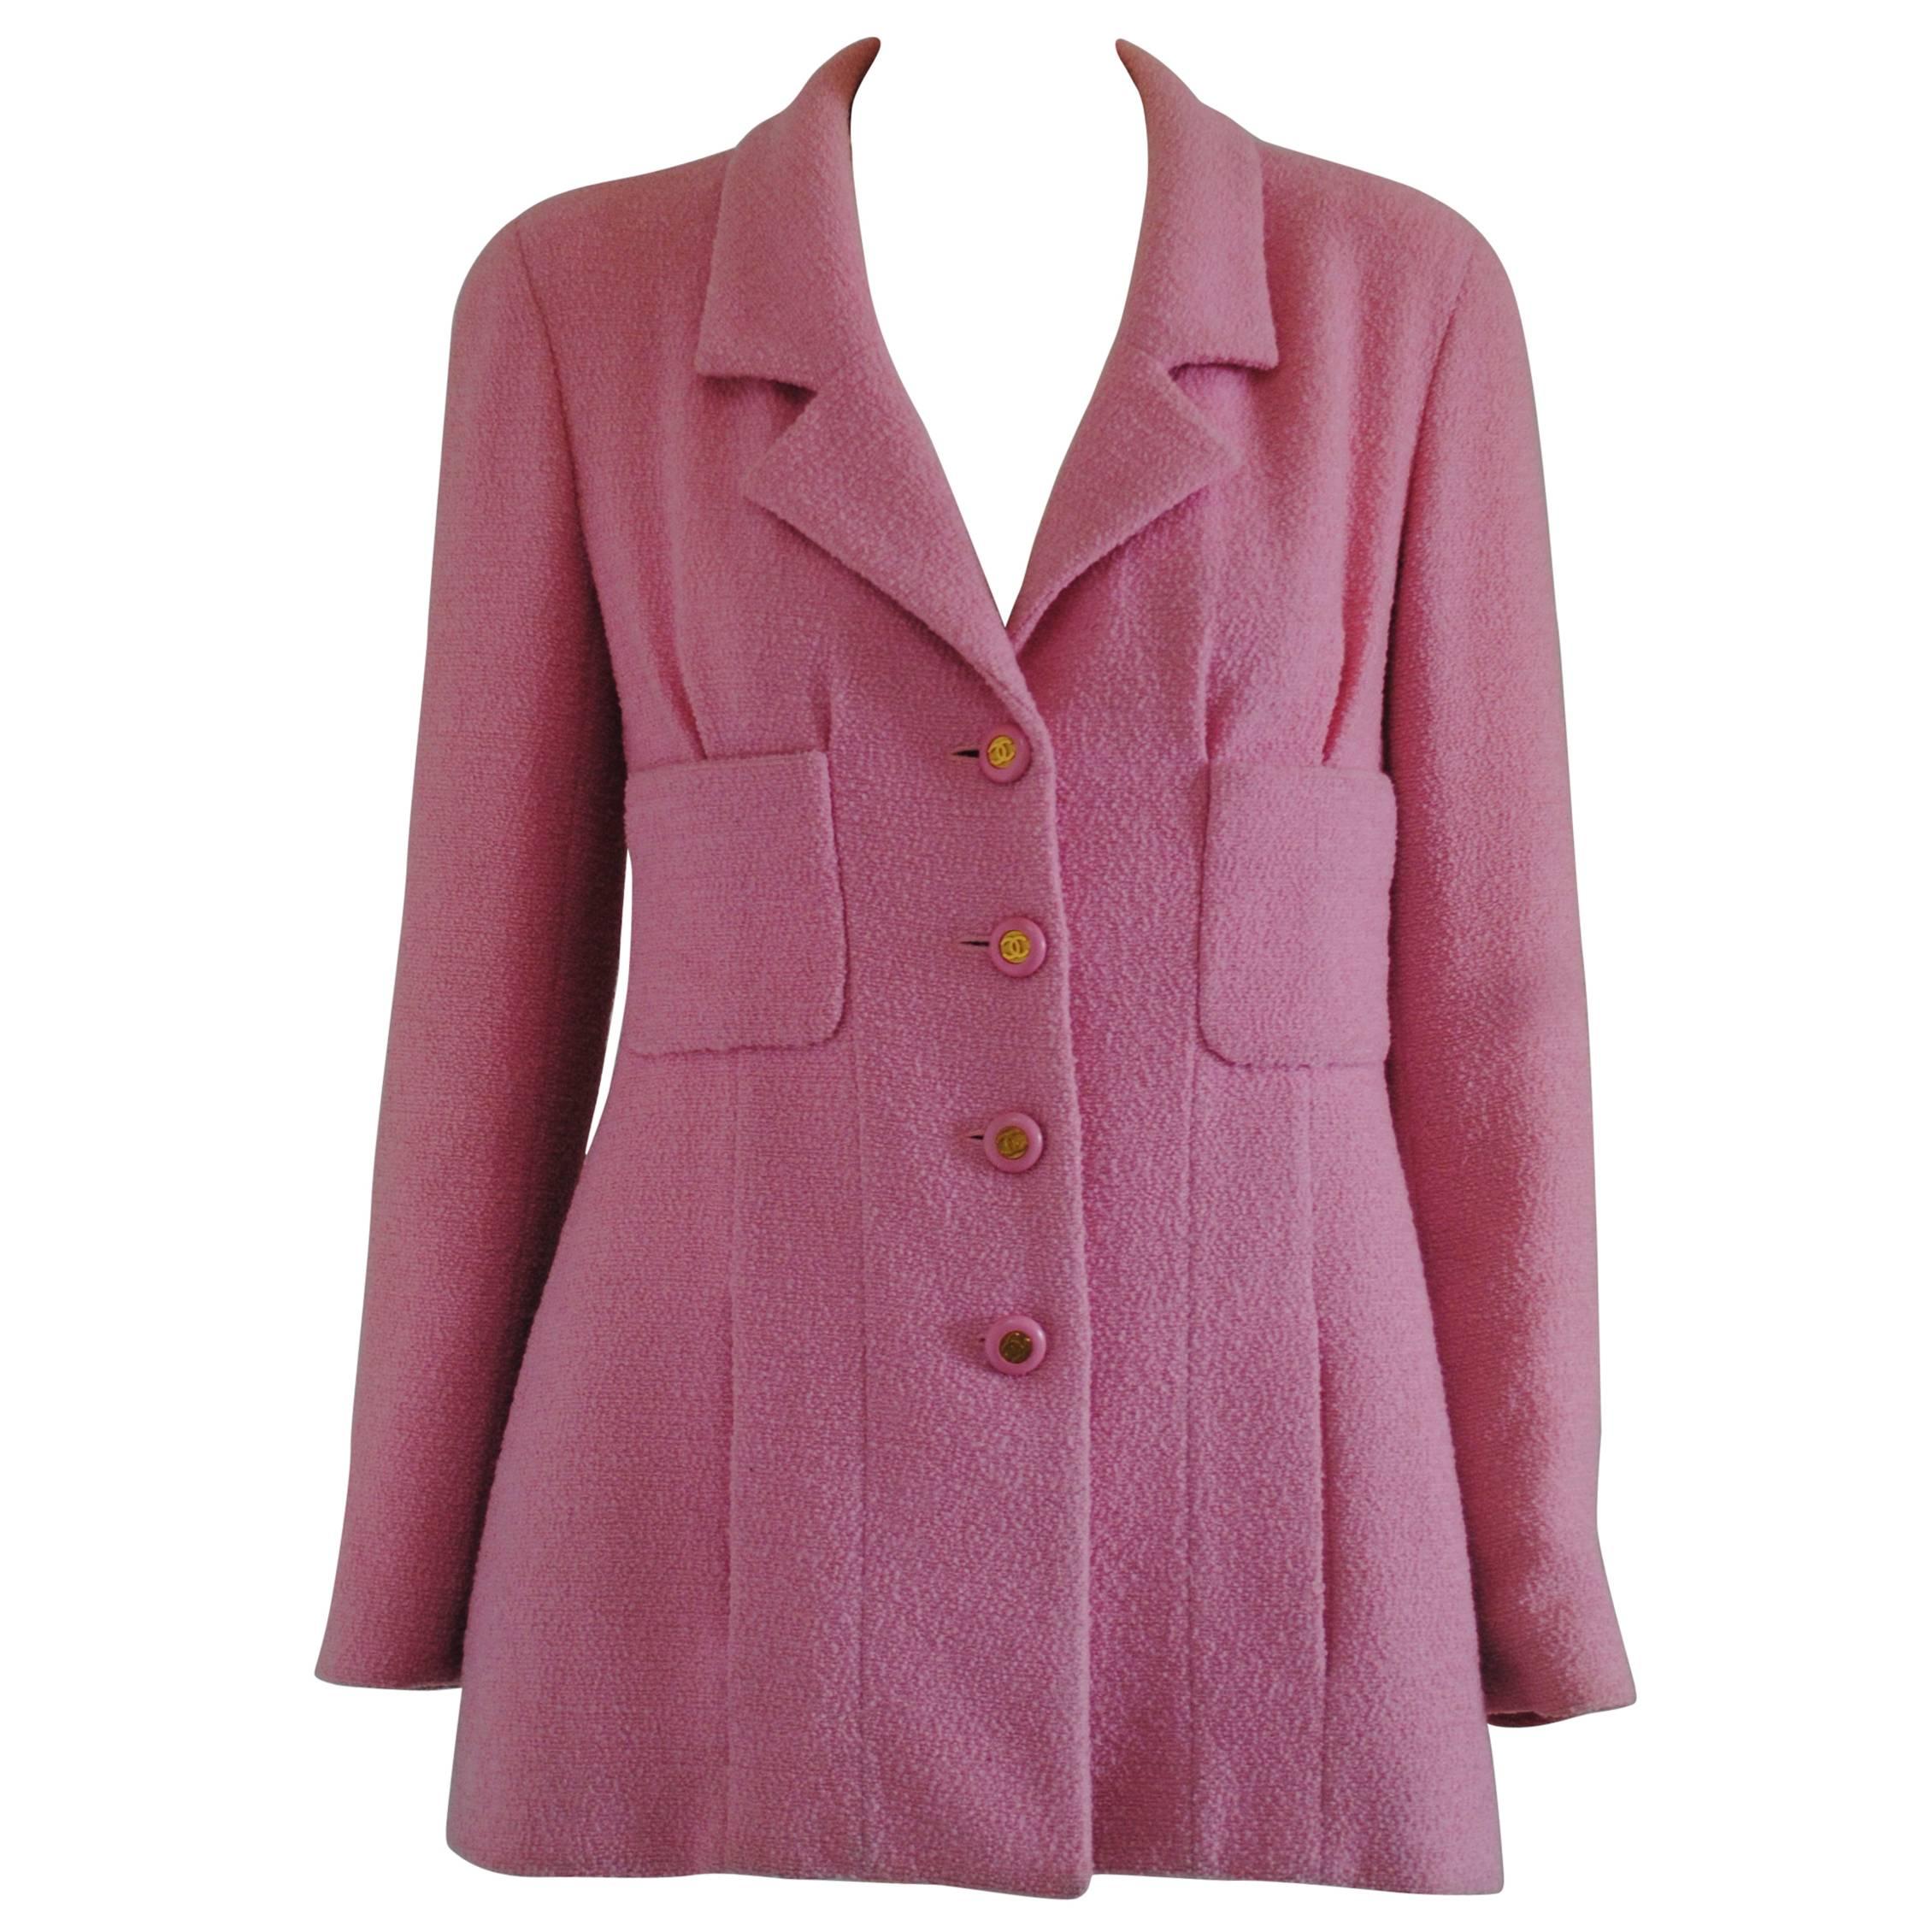 1992 Chanel Pink Boucle Wool Jacket